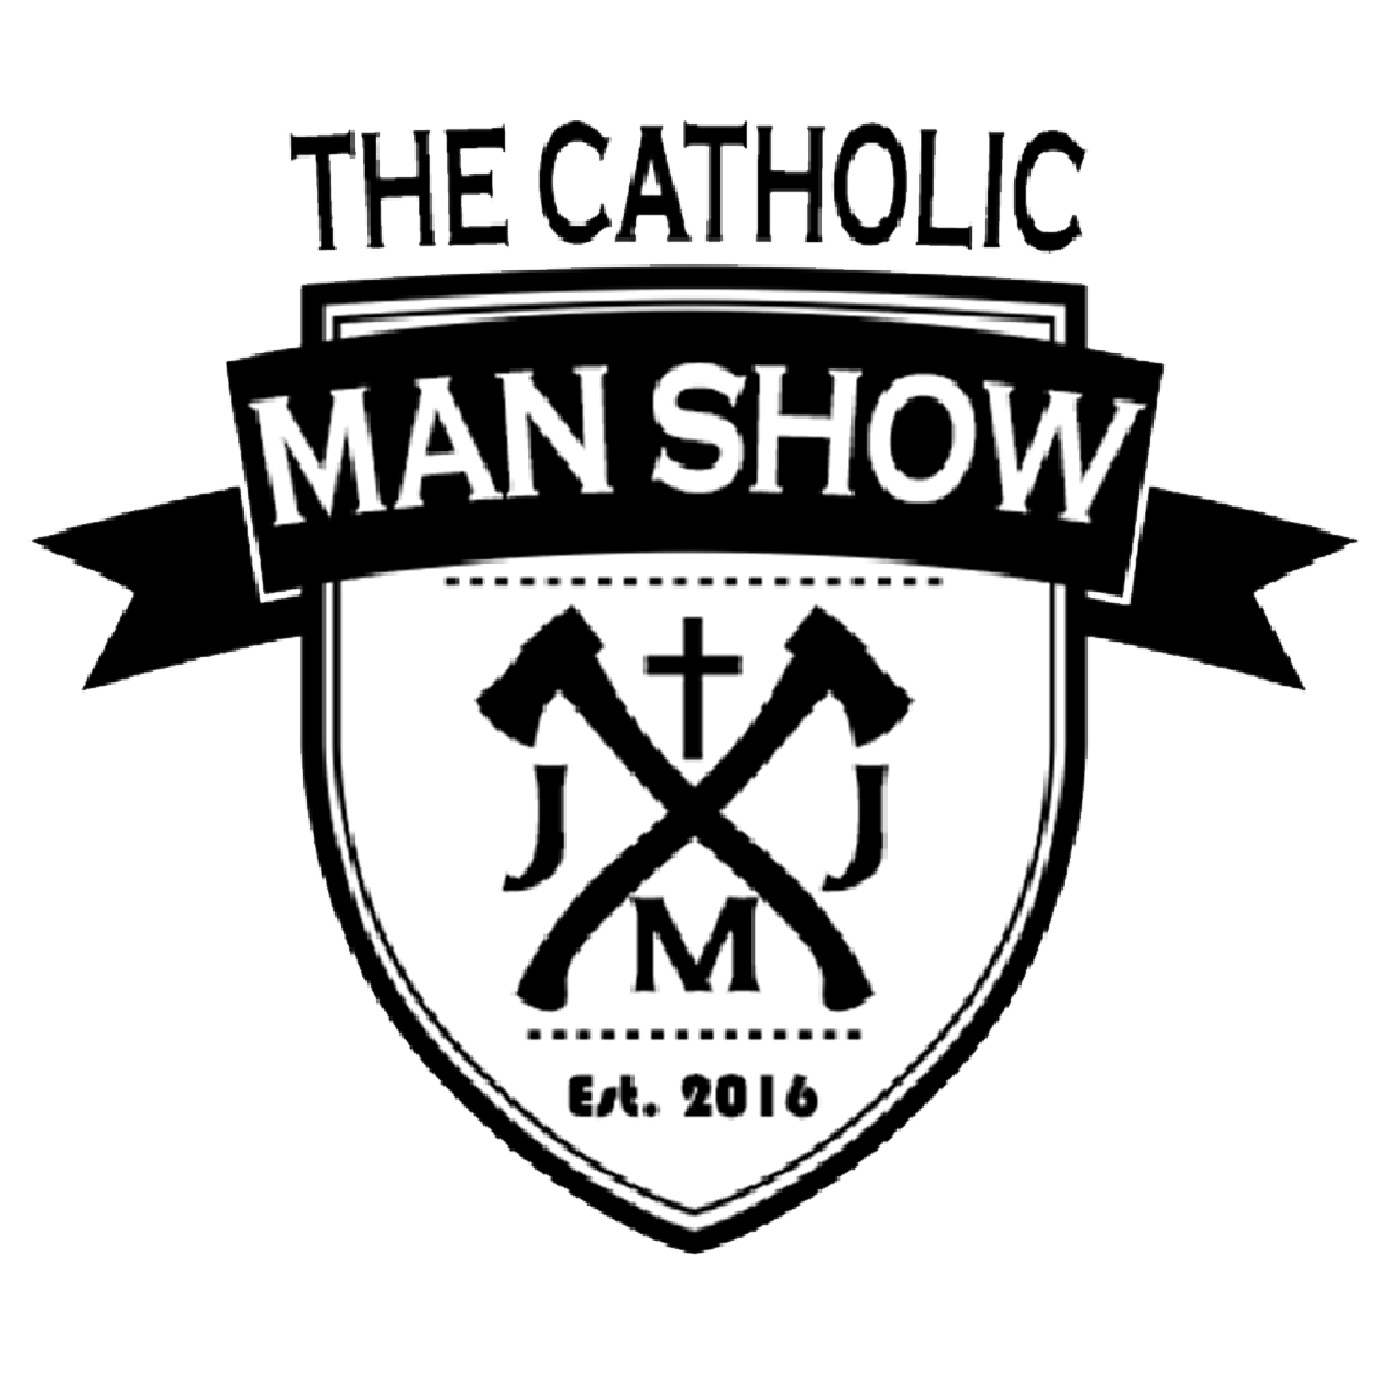 The Catholic Man Show Episode 42: Sam Guzman, The Catholic Gentleman, Little Kids in Mass